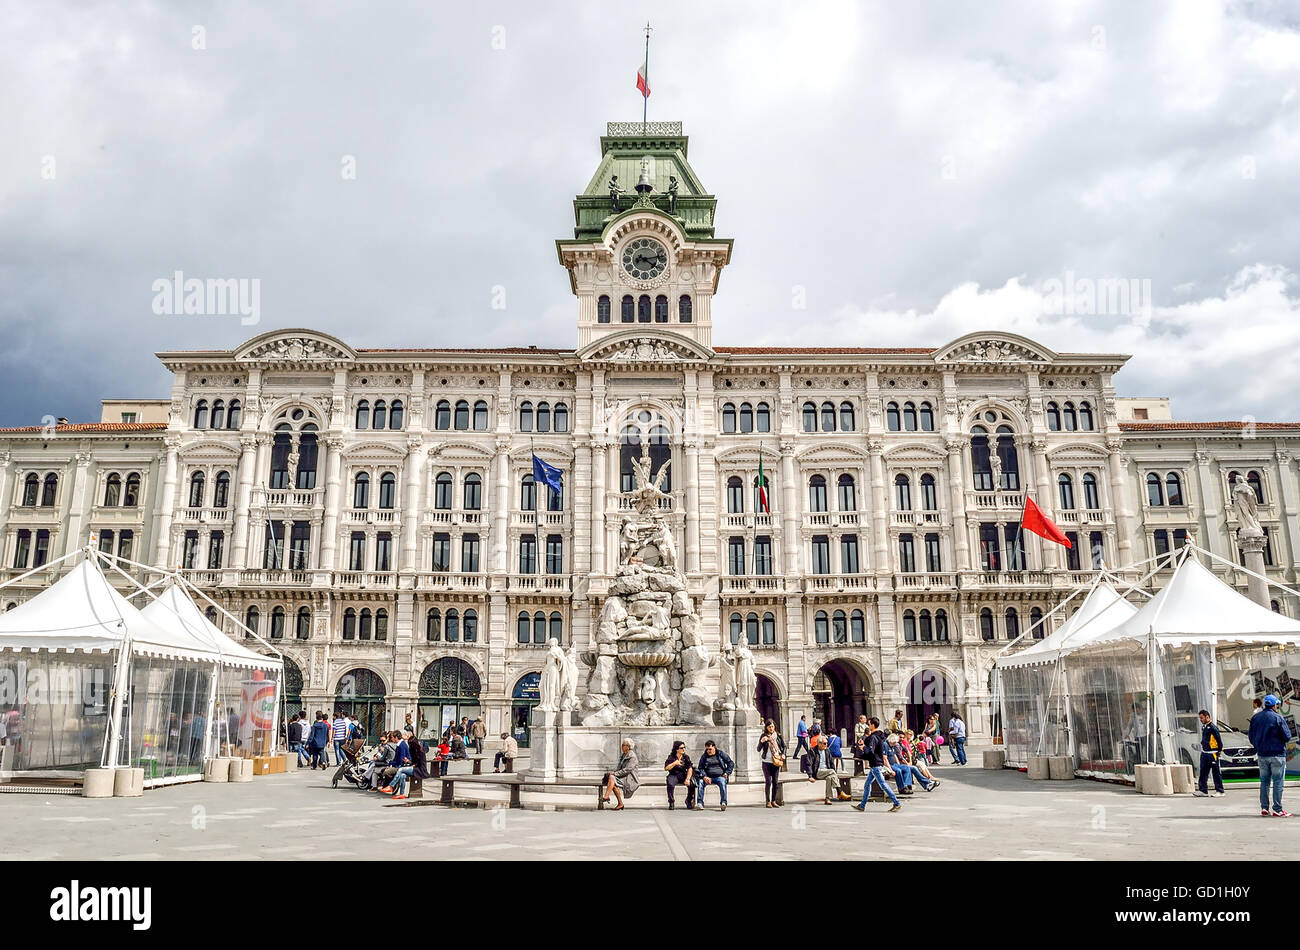 Trieste fountain of the Four Continents in the city's main plaza piazza unita italia Stock Photo